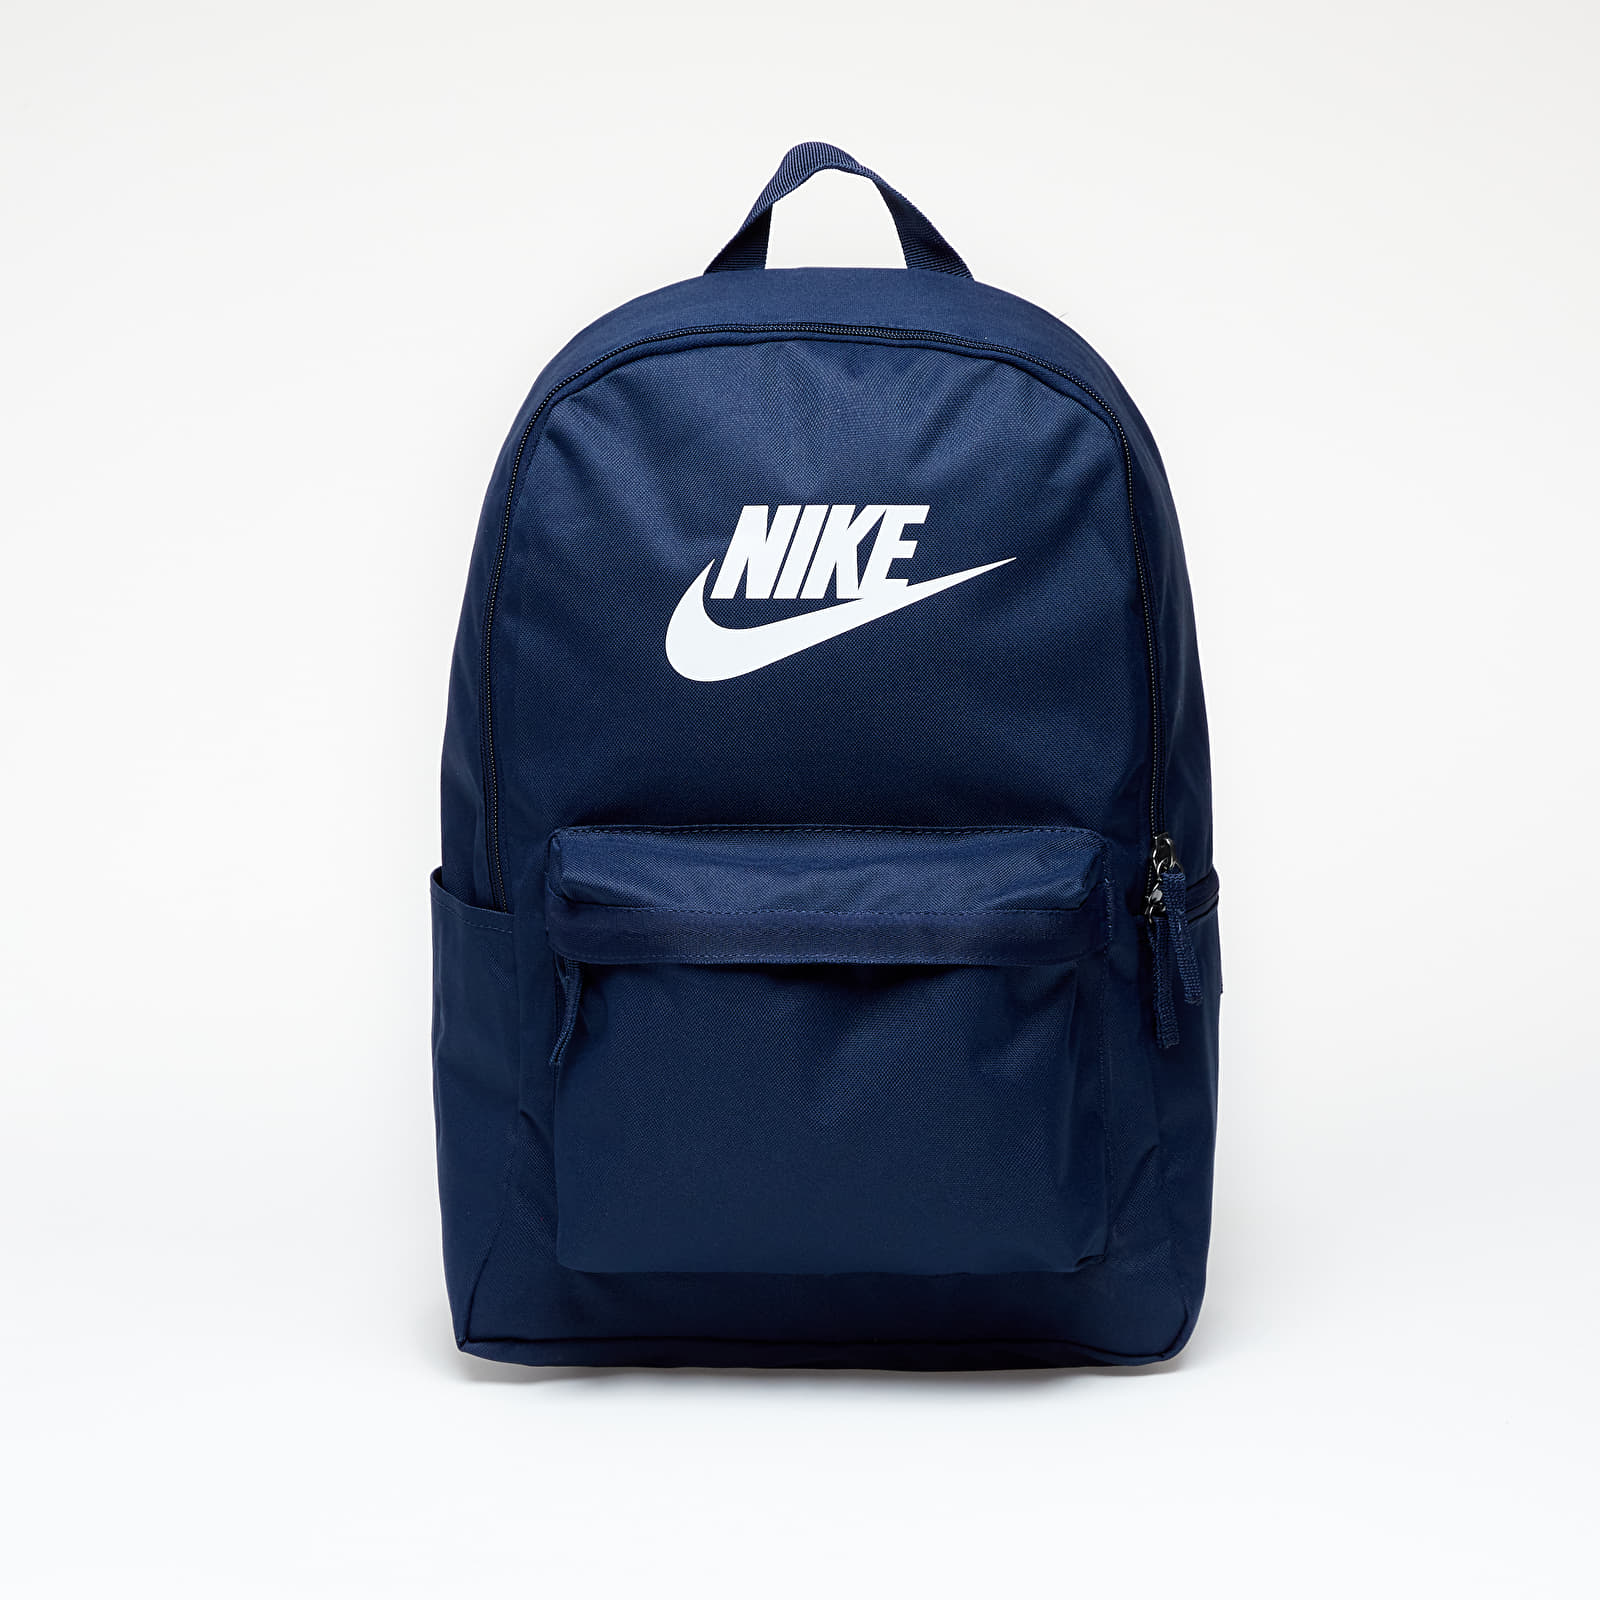 Раници Nike Backpack Obsidian/ Obsidian/ White 807829